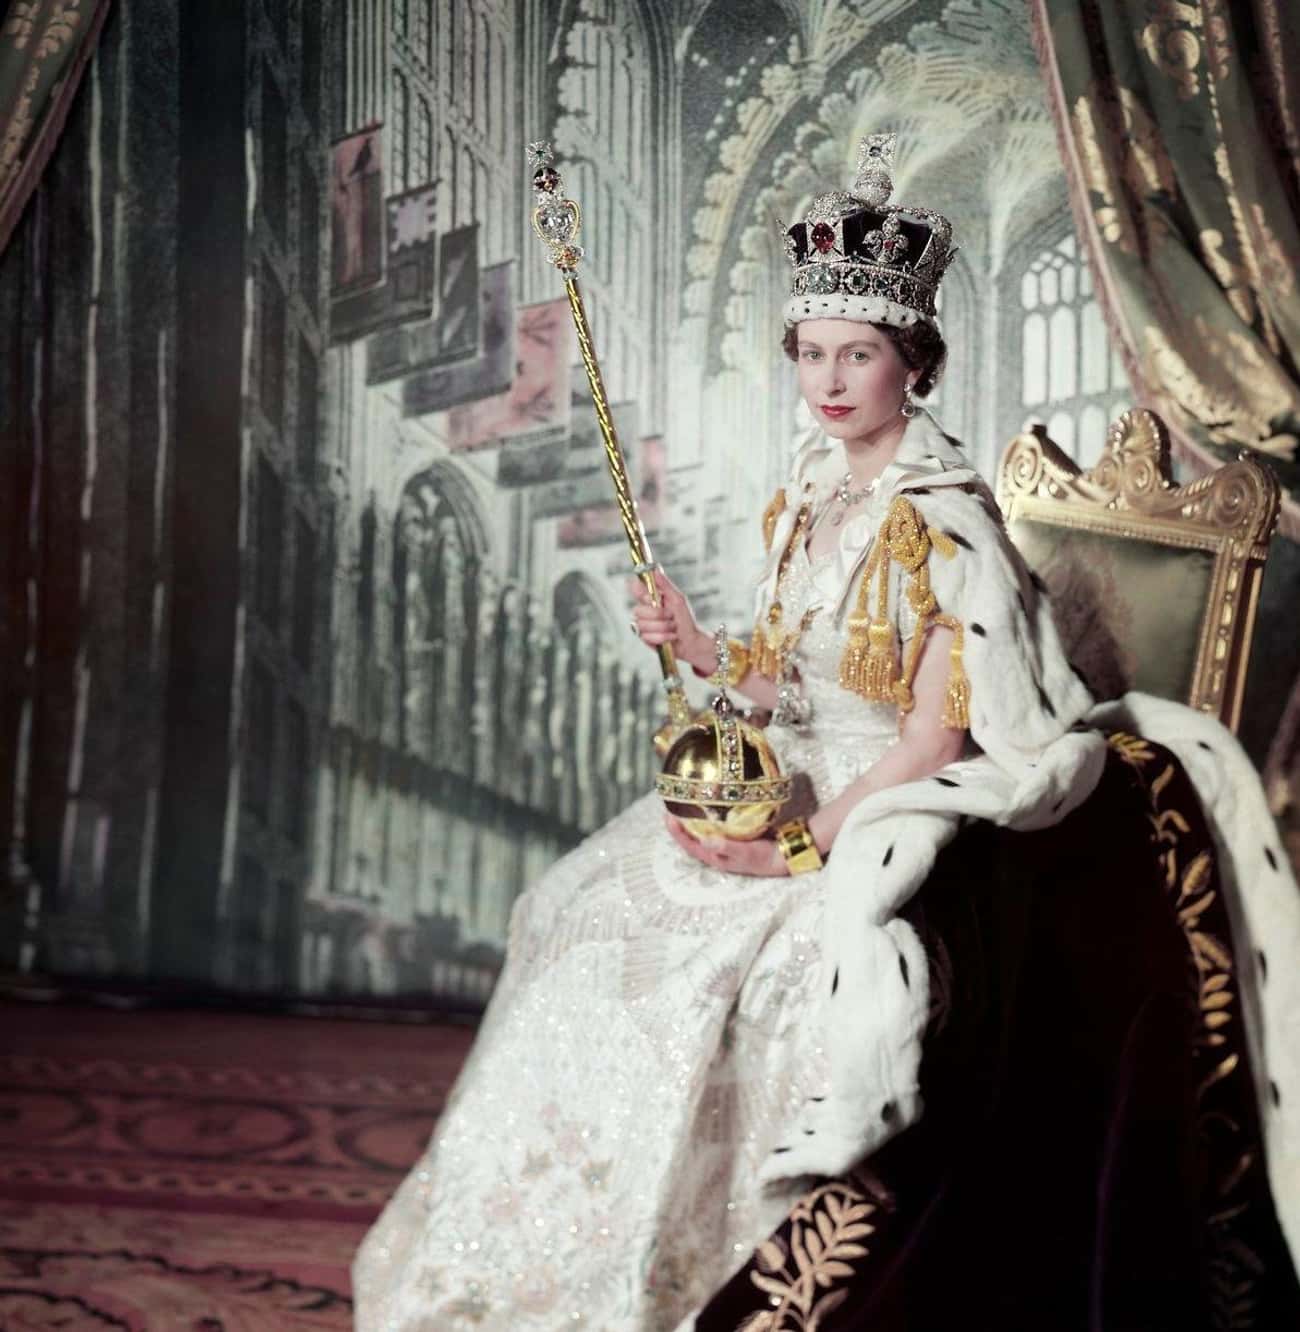 Queen Elizabeth II Passes At Age 96